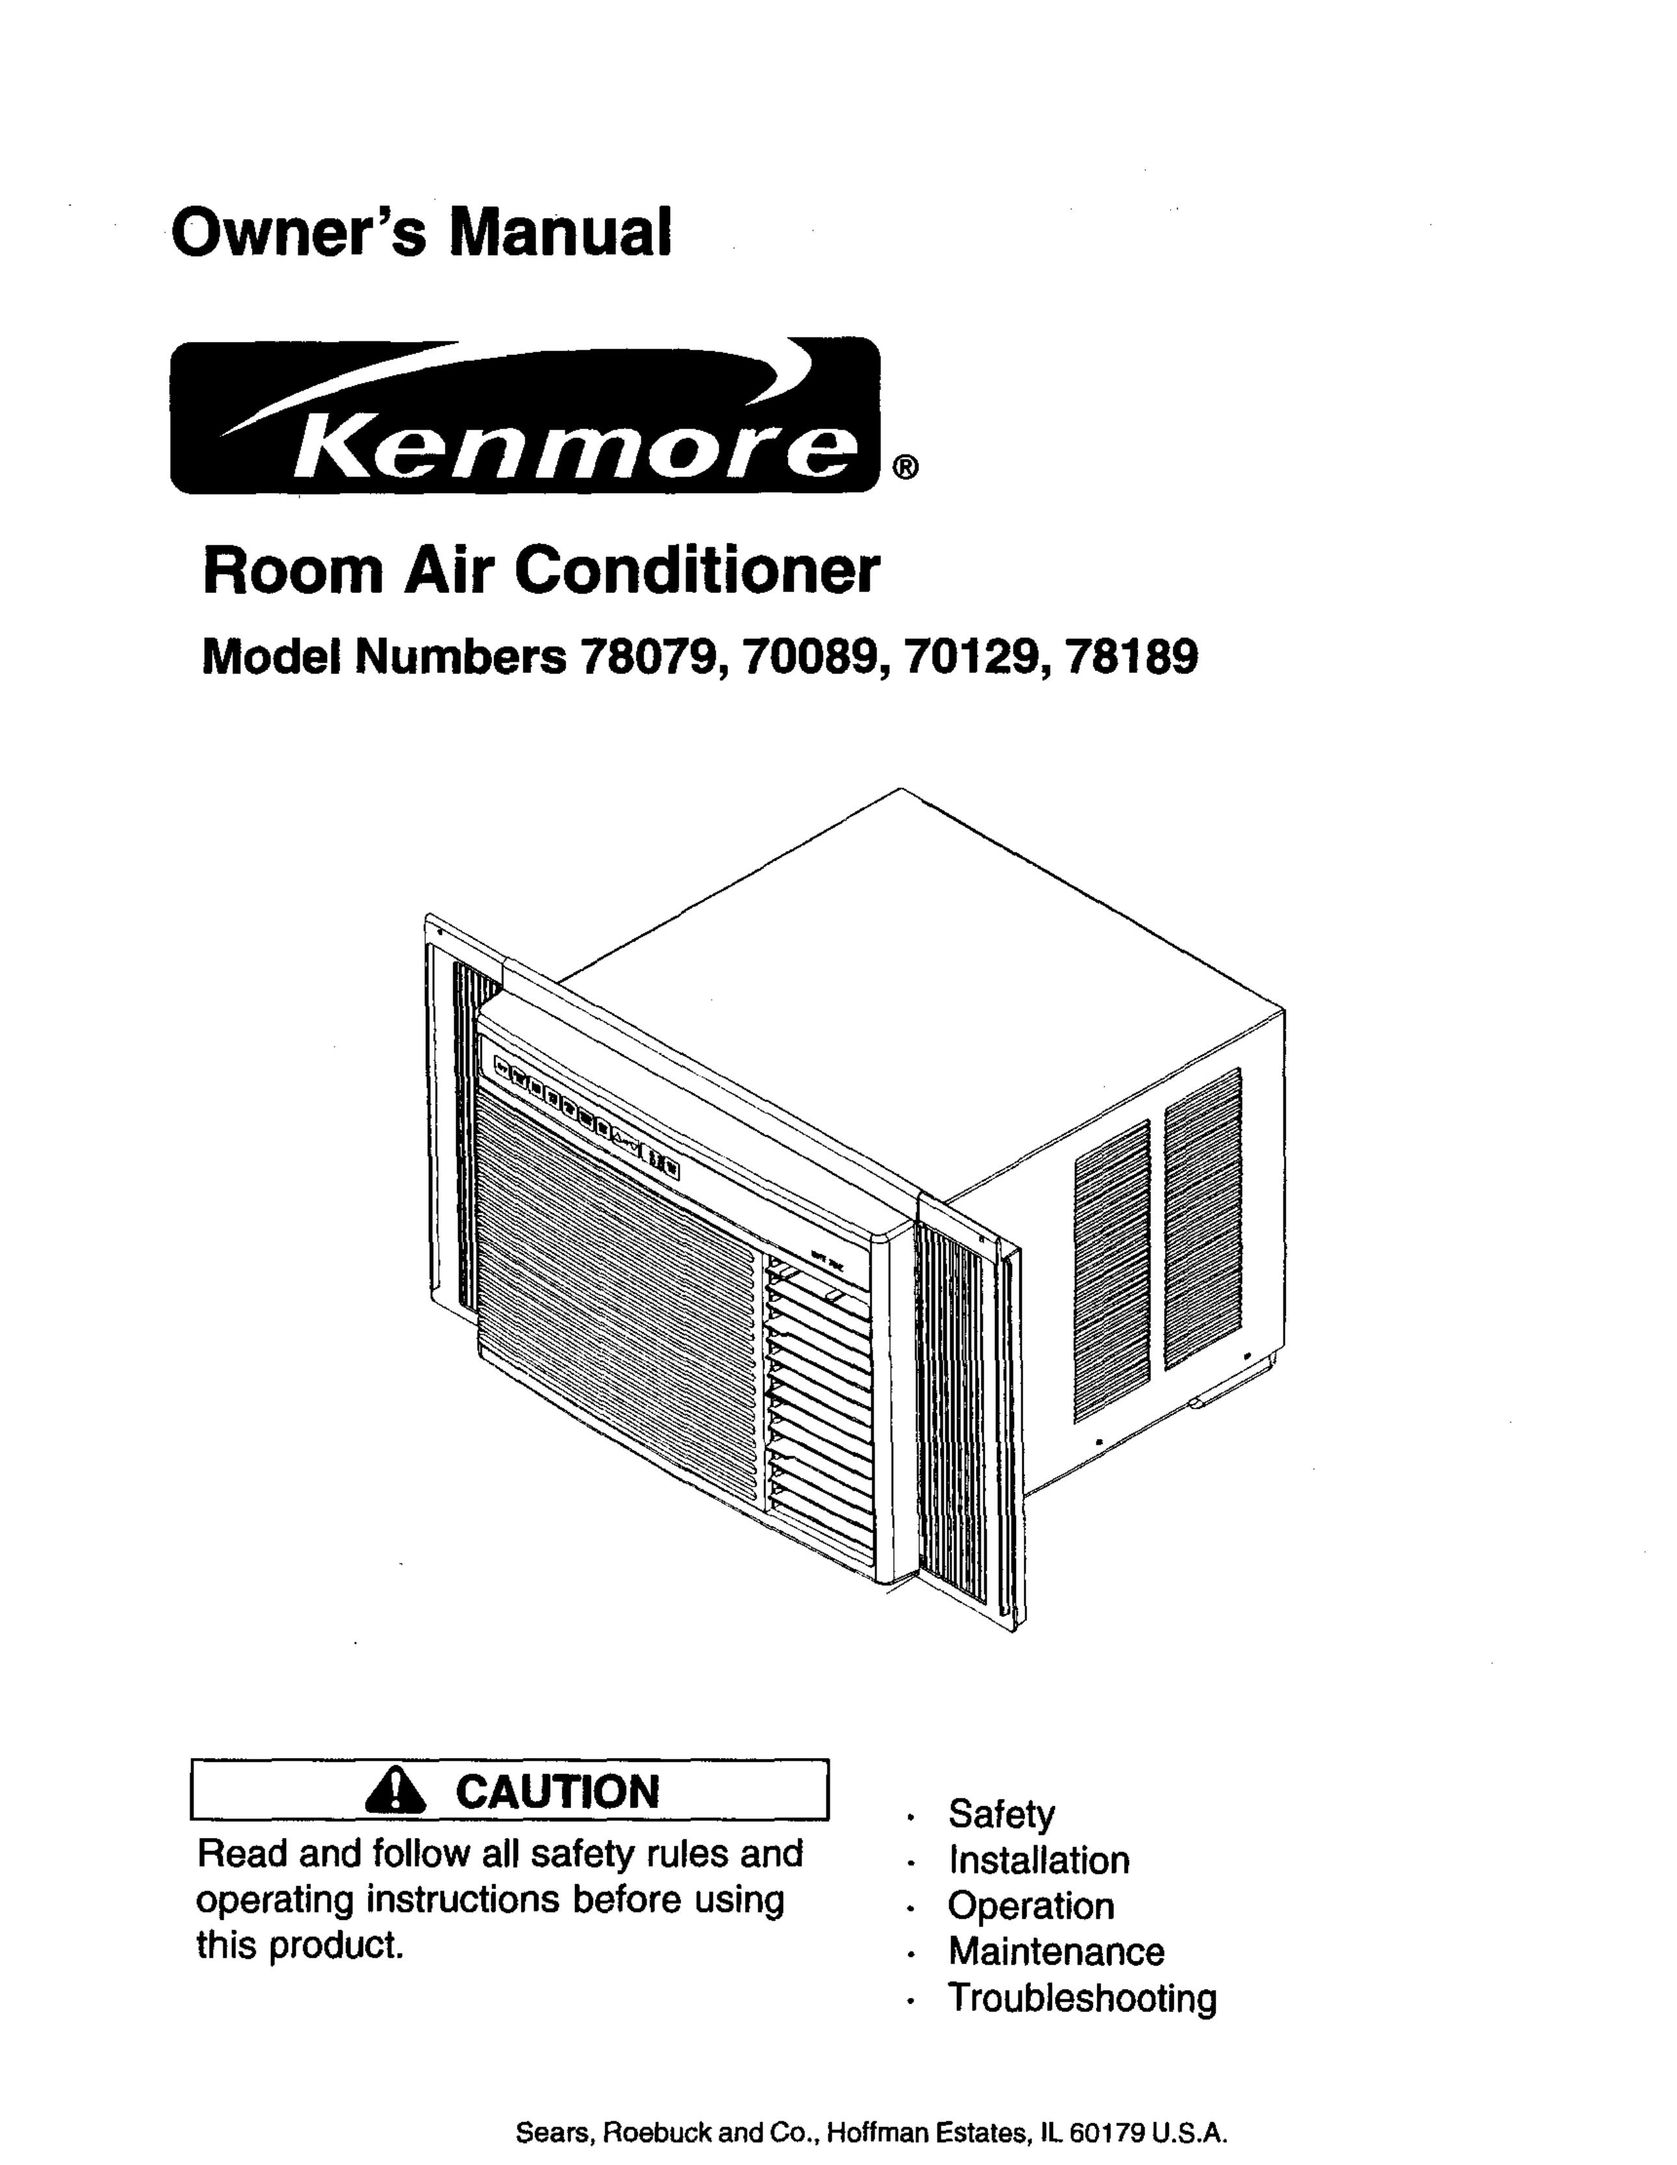 Kenmore 78189 Air Conditioner User Manual